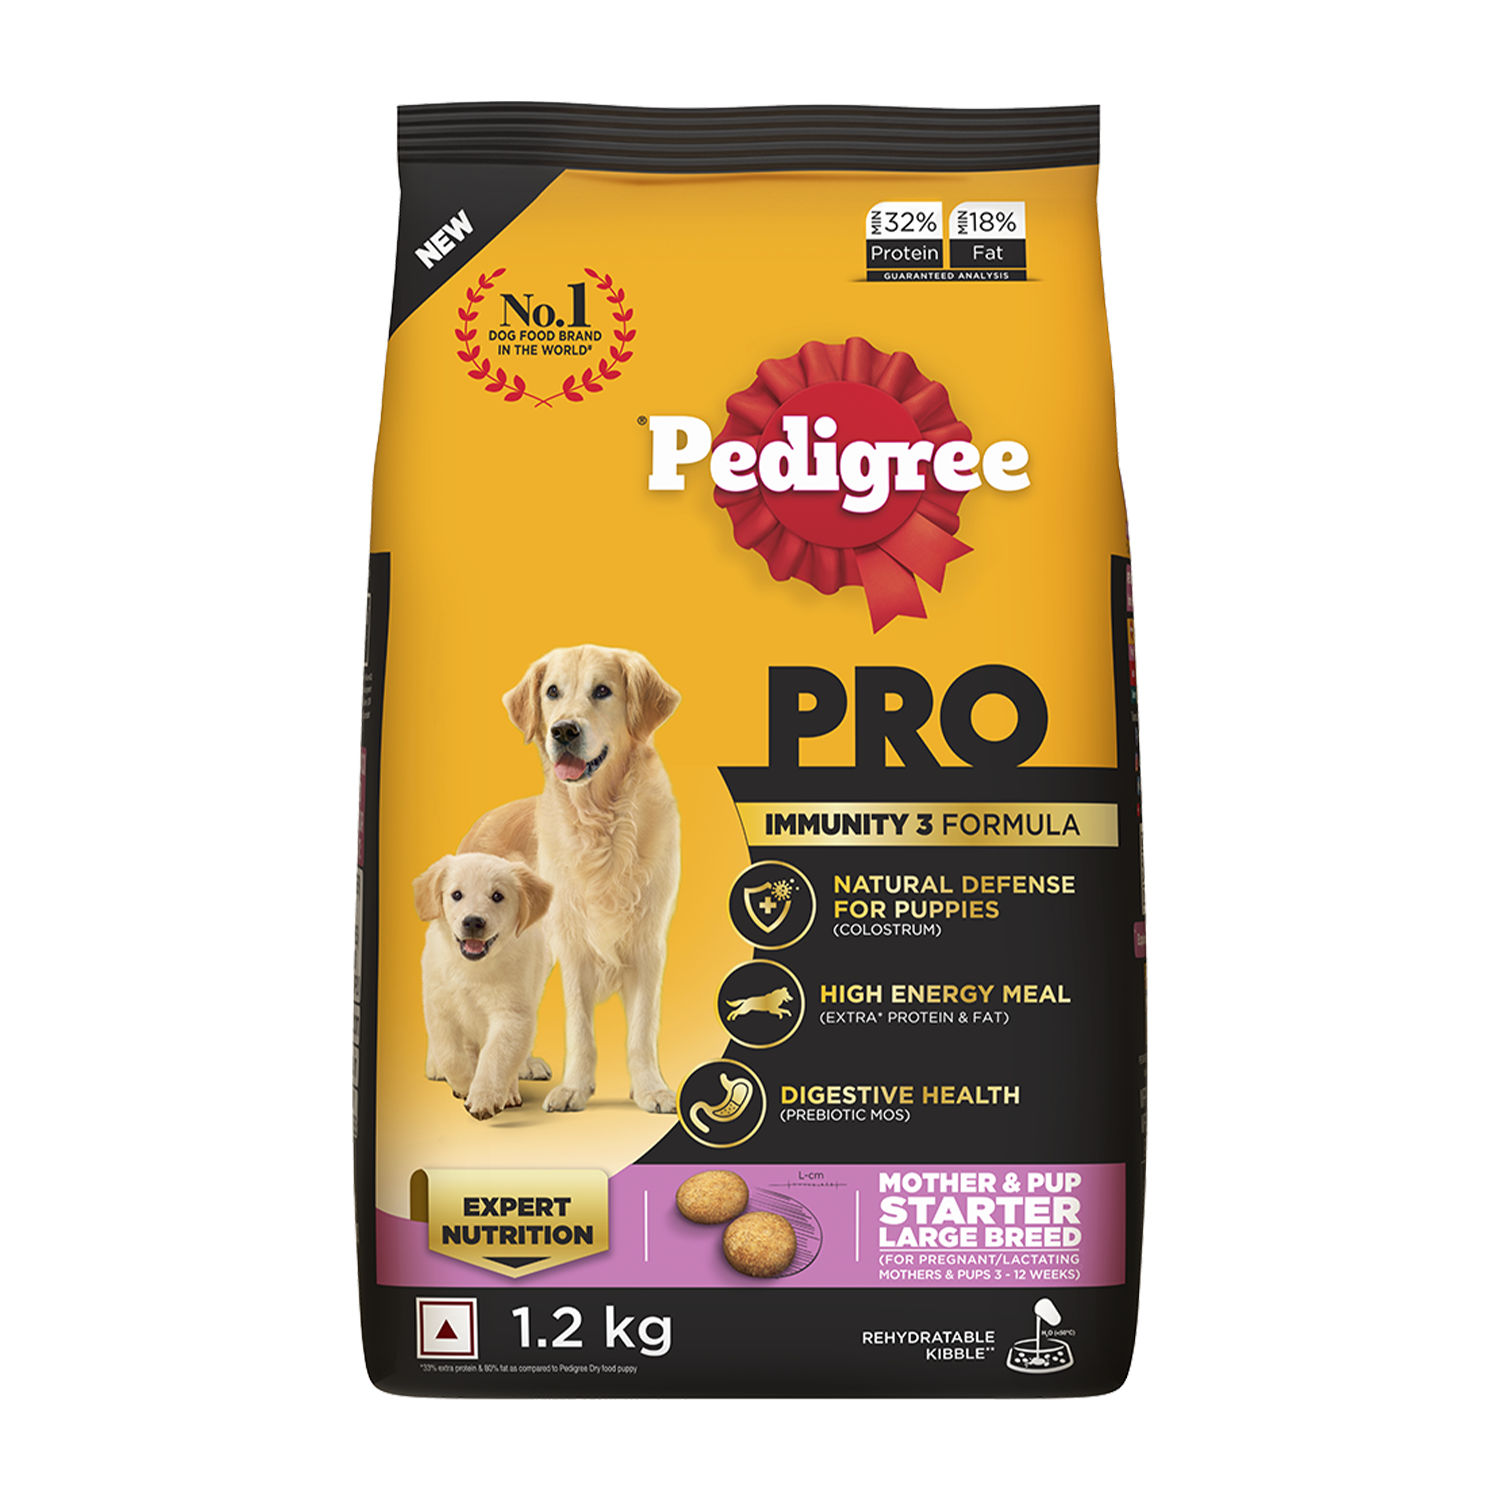 Mother & Pup Starter Large Breed-1.2kg-f | pedigree | dog food | petzsetgo